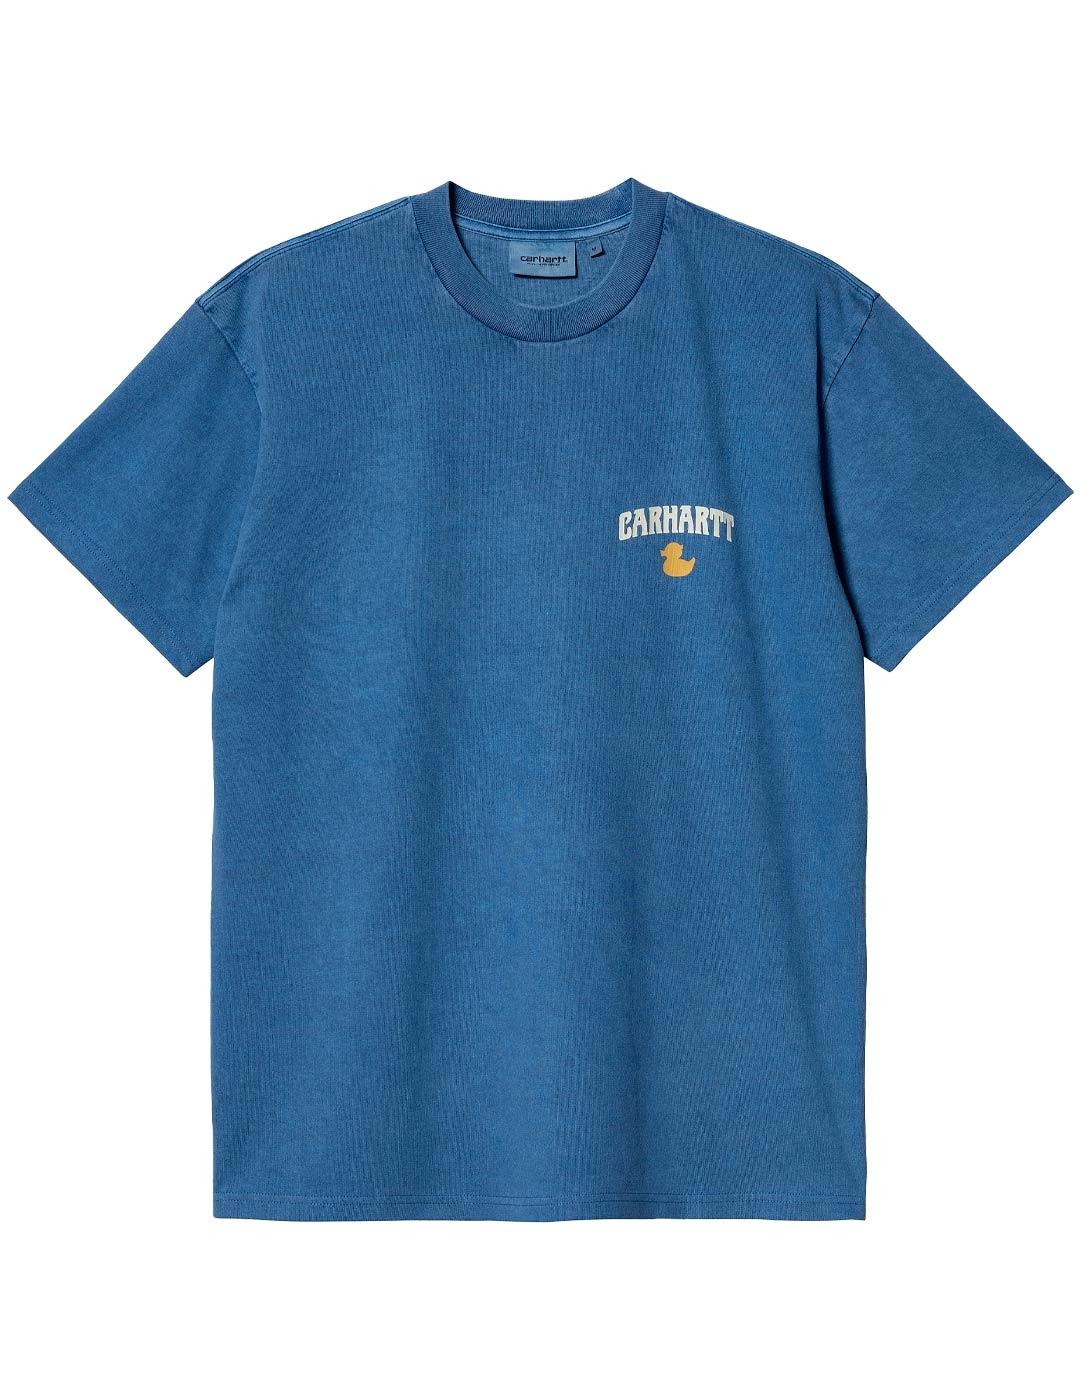 Camiseta Carhartt Wip Duckin Azul